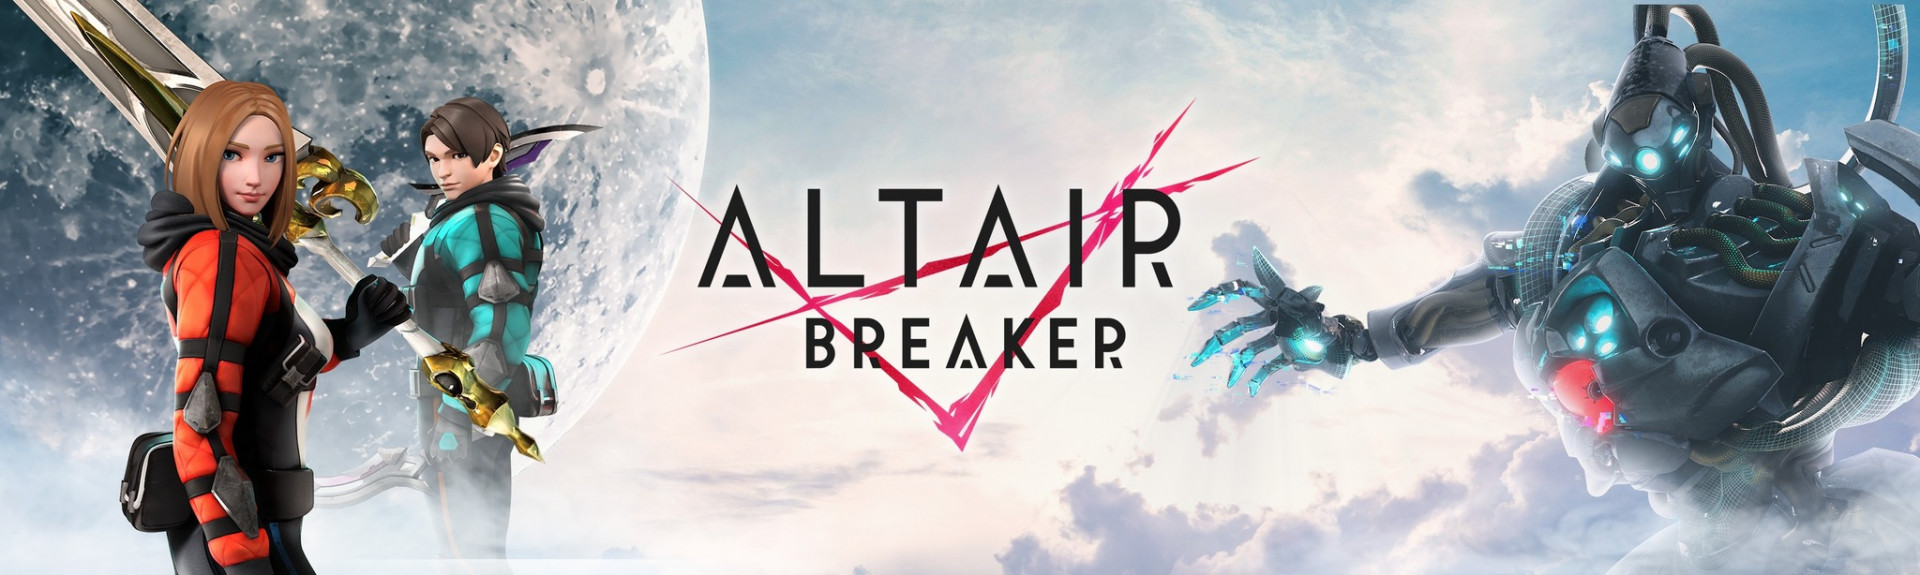 Altair Breaker: ANÁLISIS